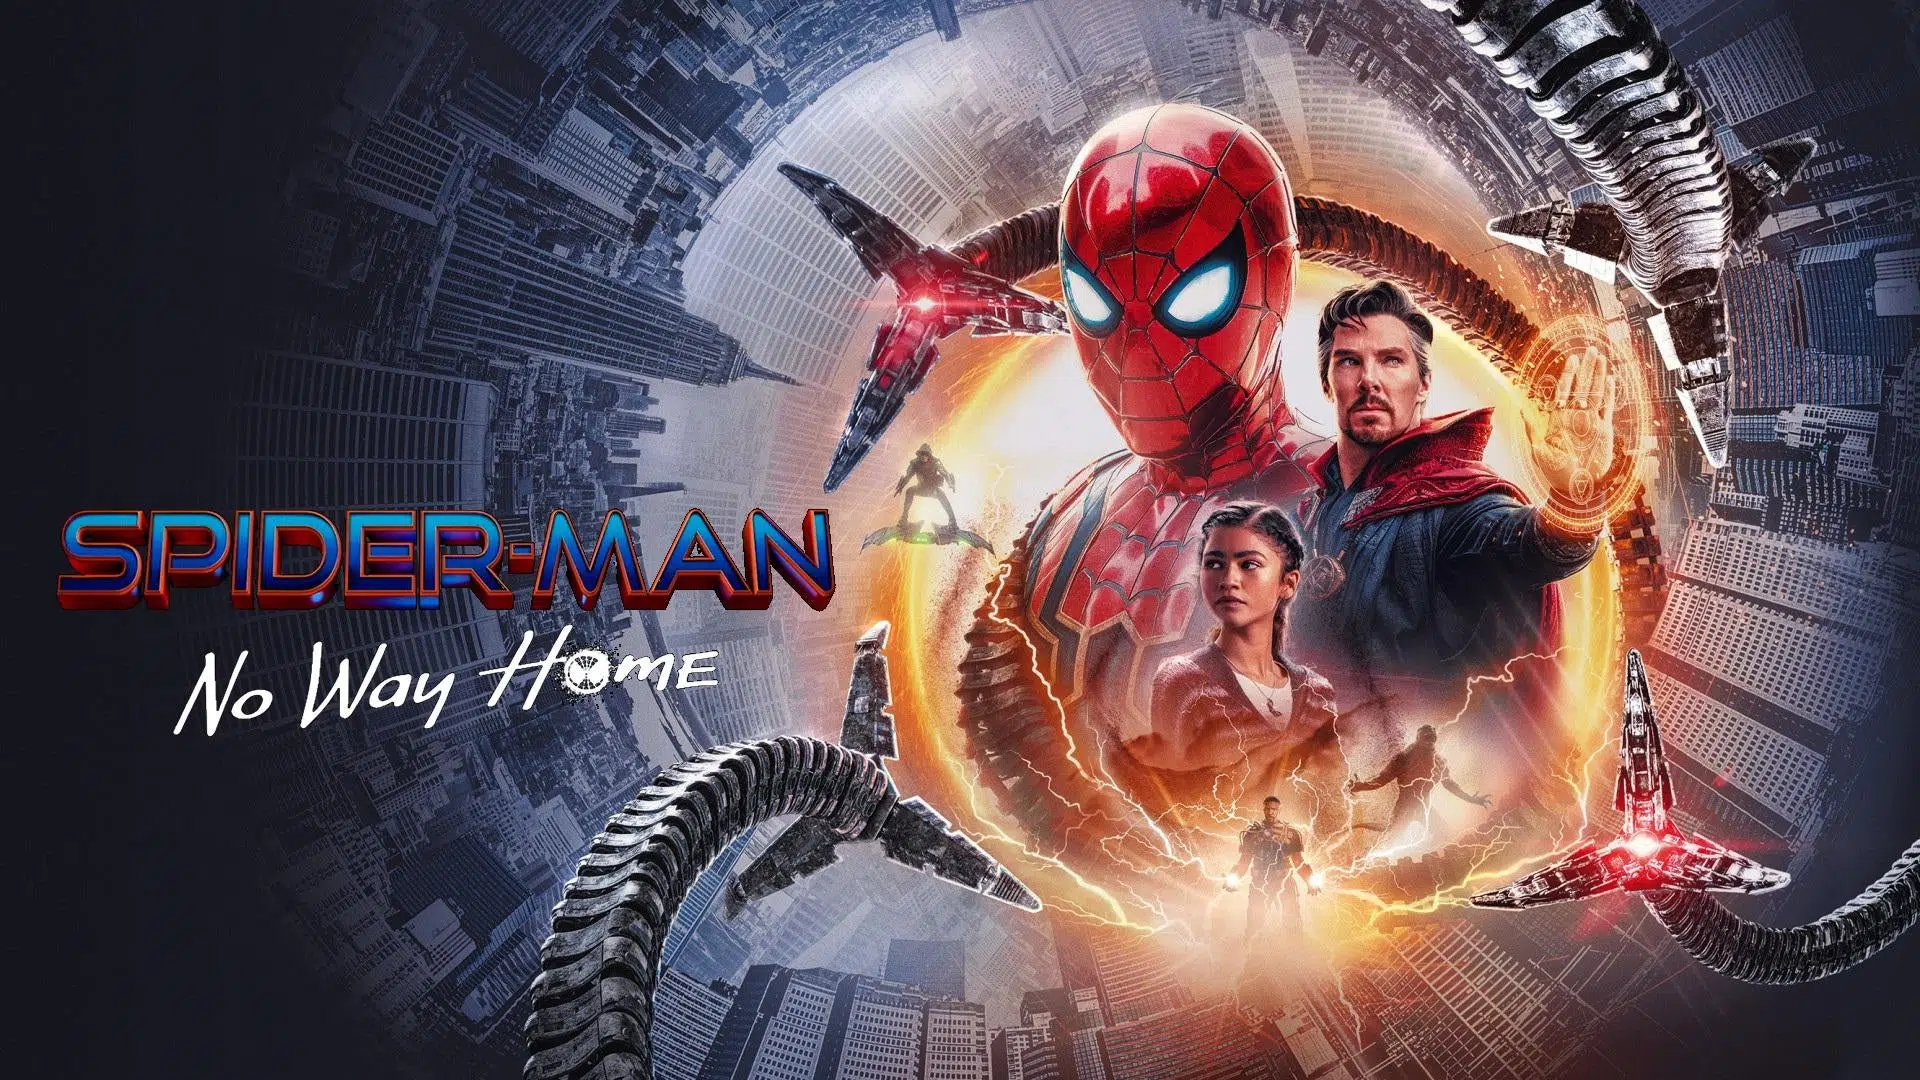 Spider-Man: No Way Home Review